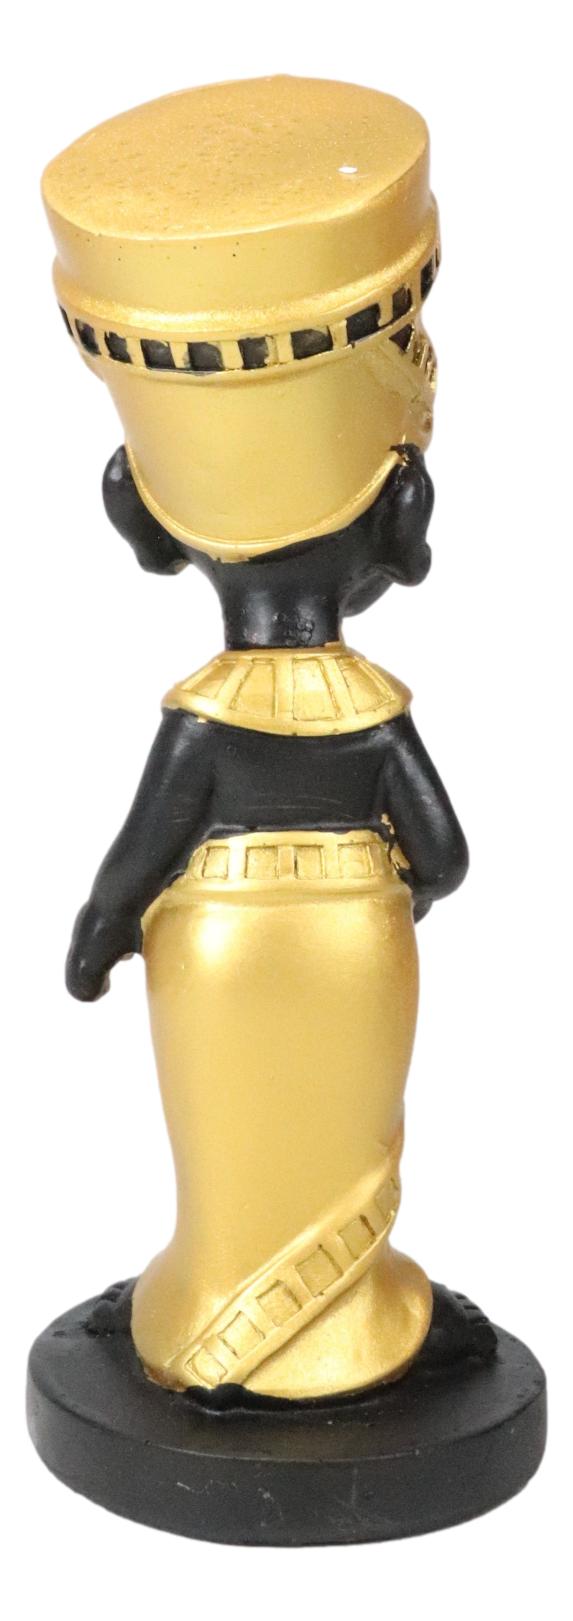 Ancient Egyptian Royal Queen Nefertiti Goddess Pharaoh Consort Figurine